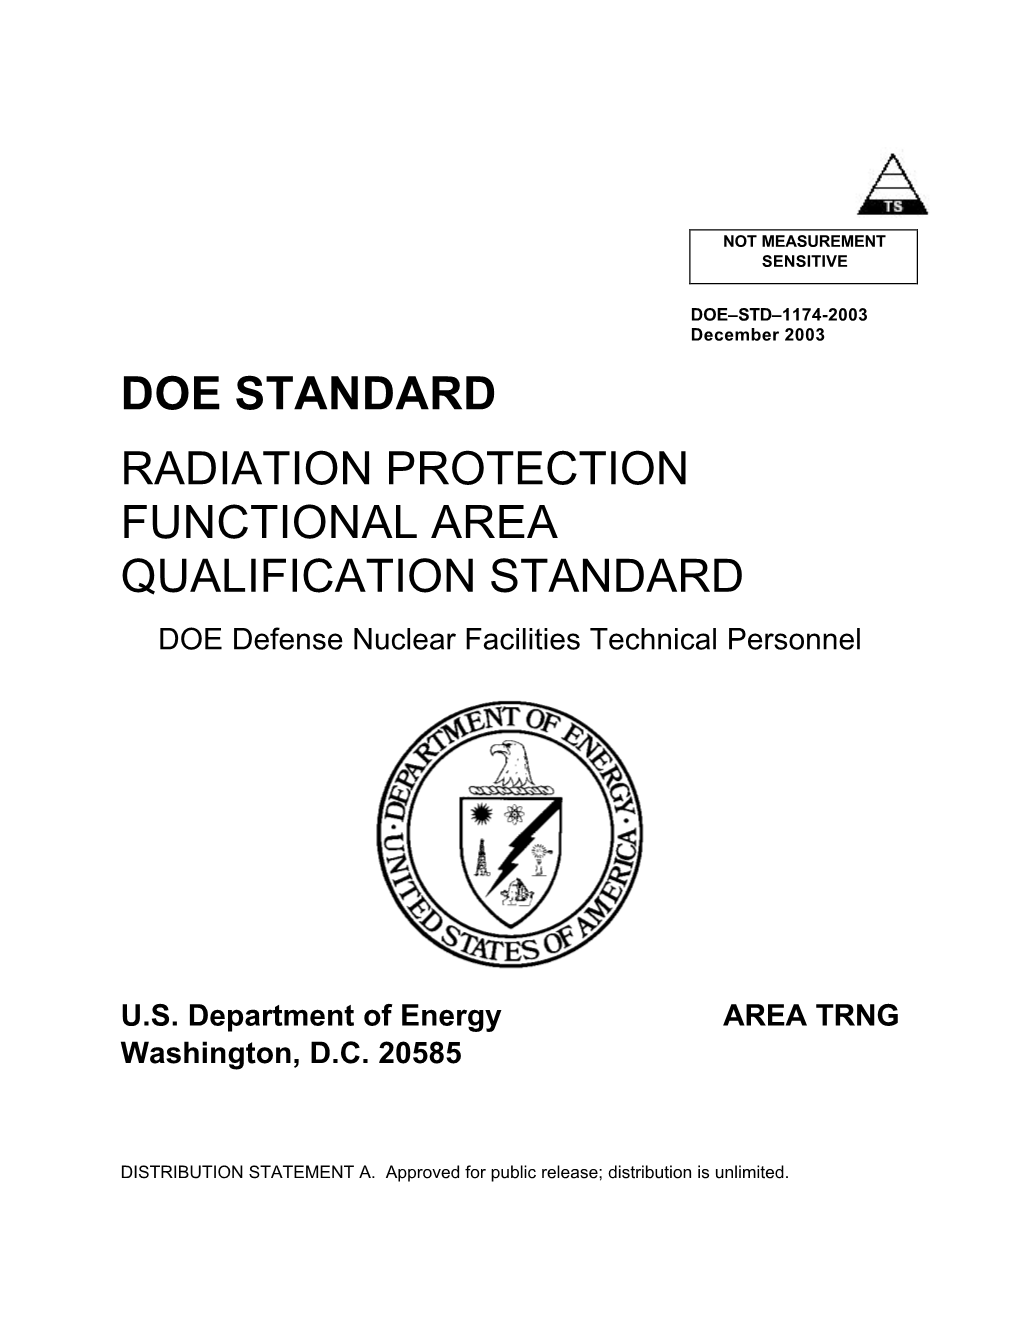 DOE-STD-1174-2003; Radiation Protection Functional Area